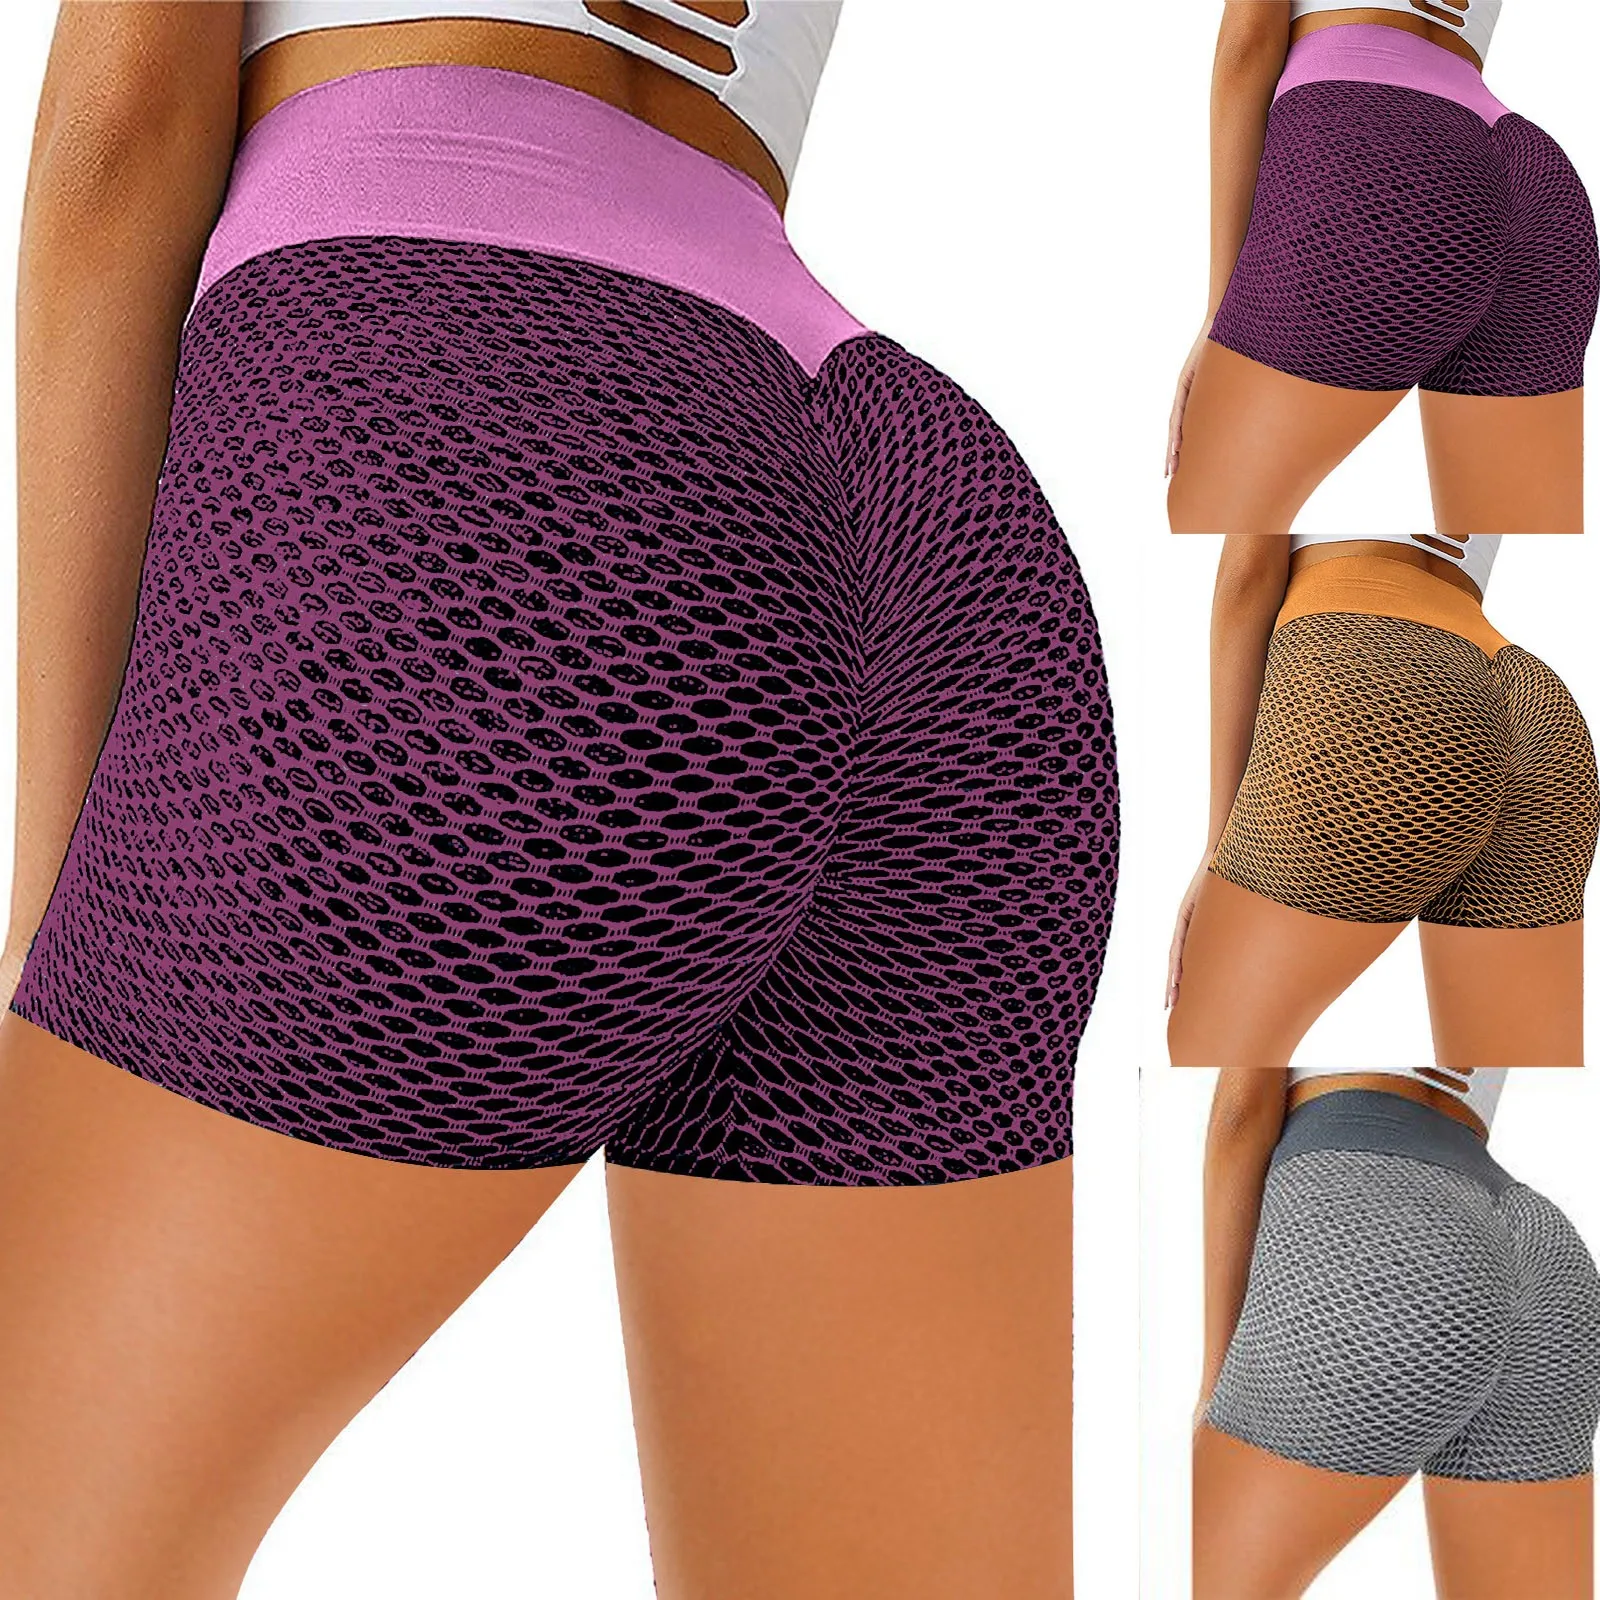 

Women's Casual Tight-fitting Skinny Buttocks Lifting Fitness Sports Yoga Shorts pantalon femme sports wear for women gym